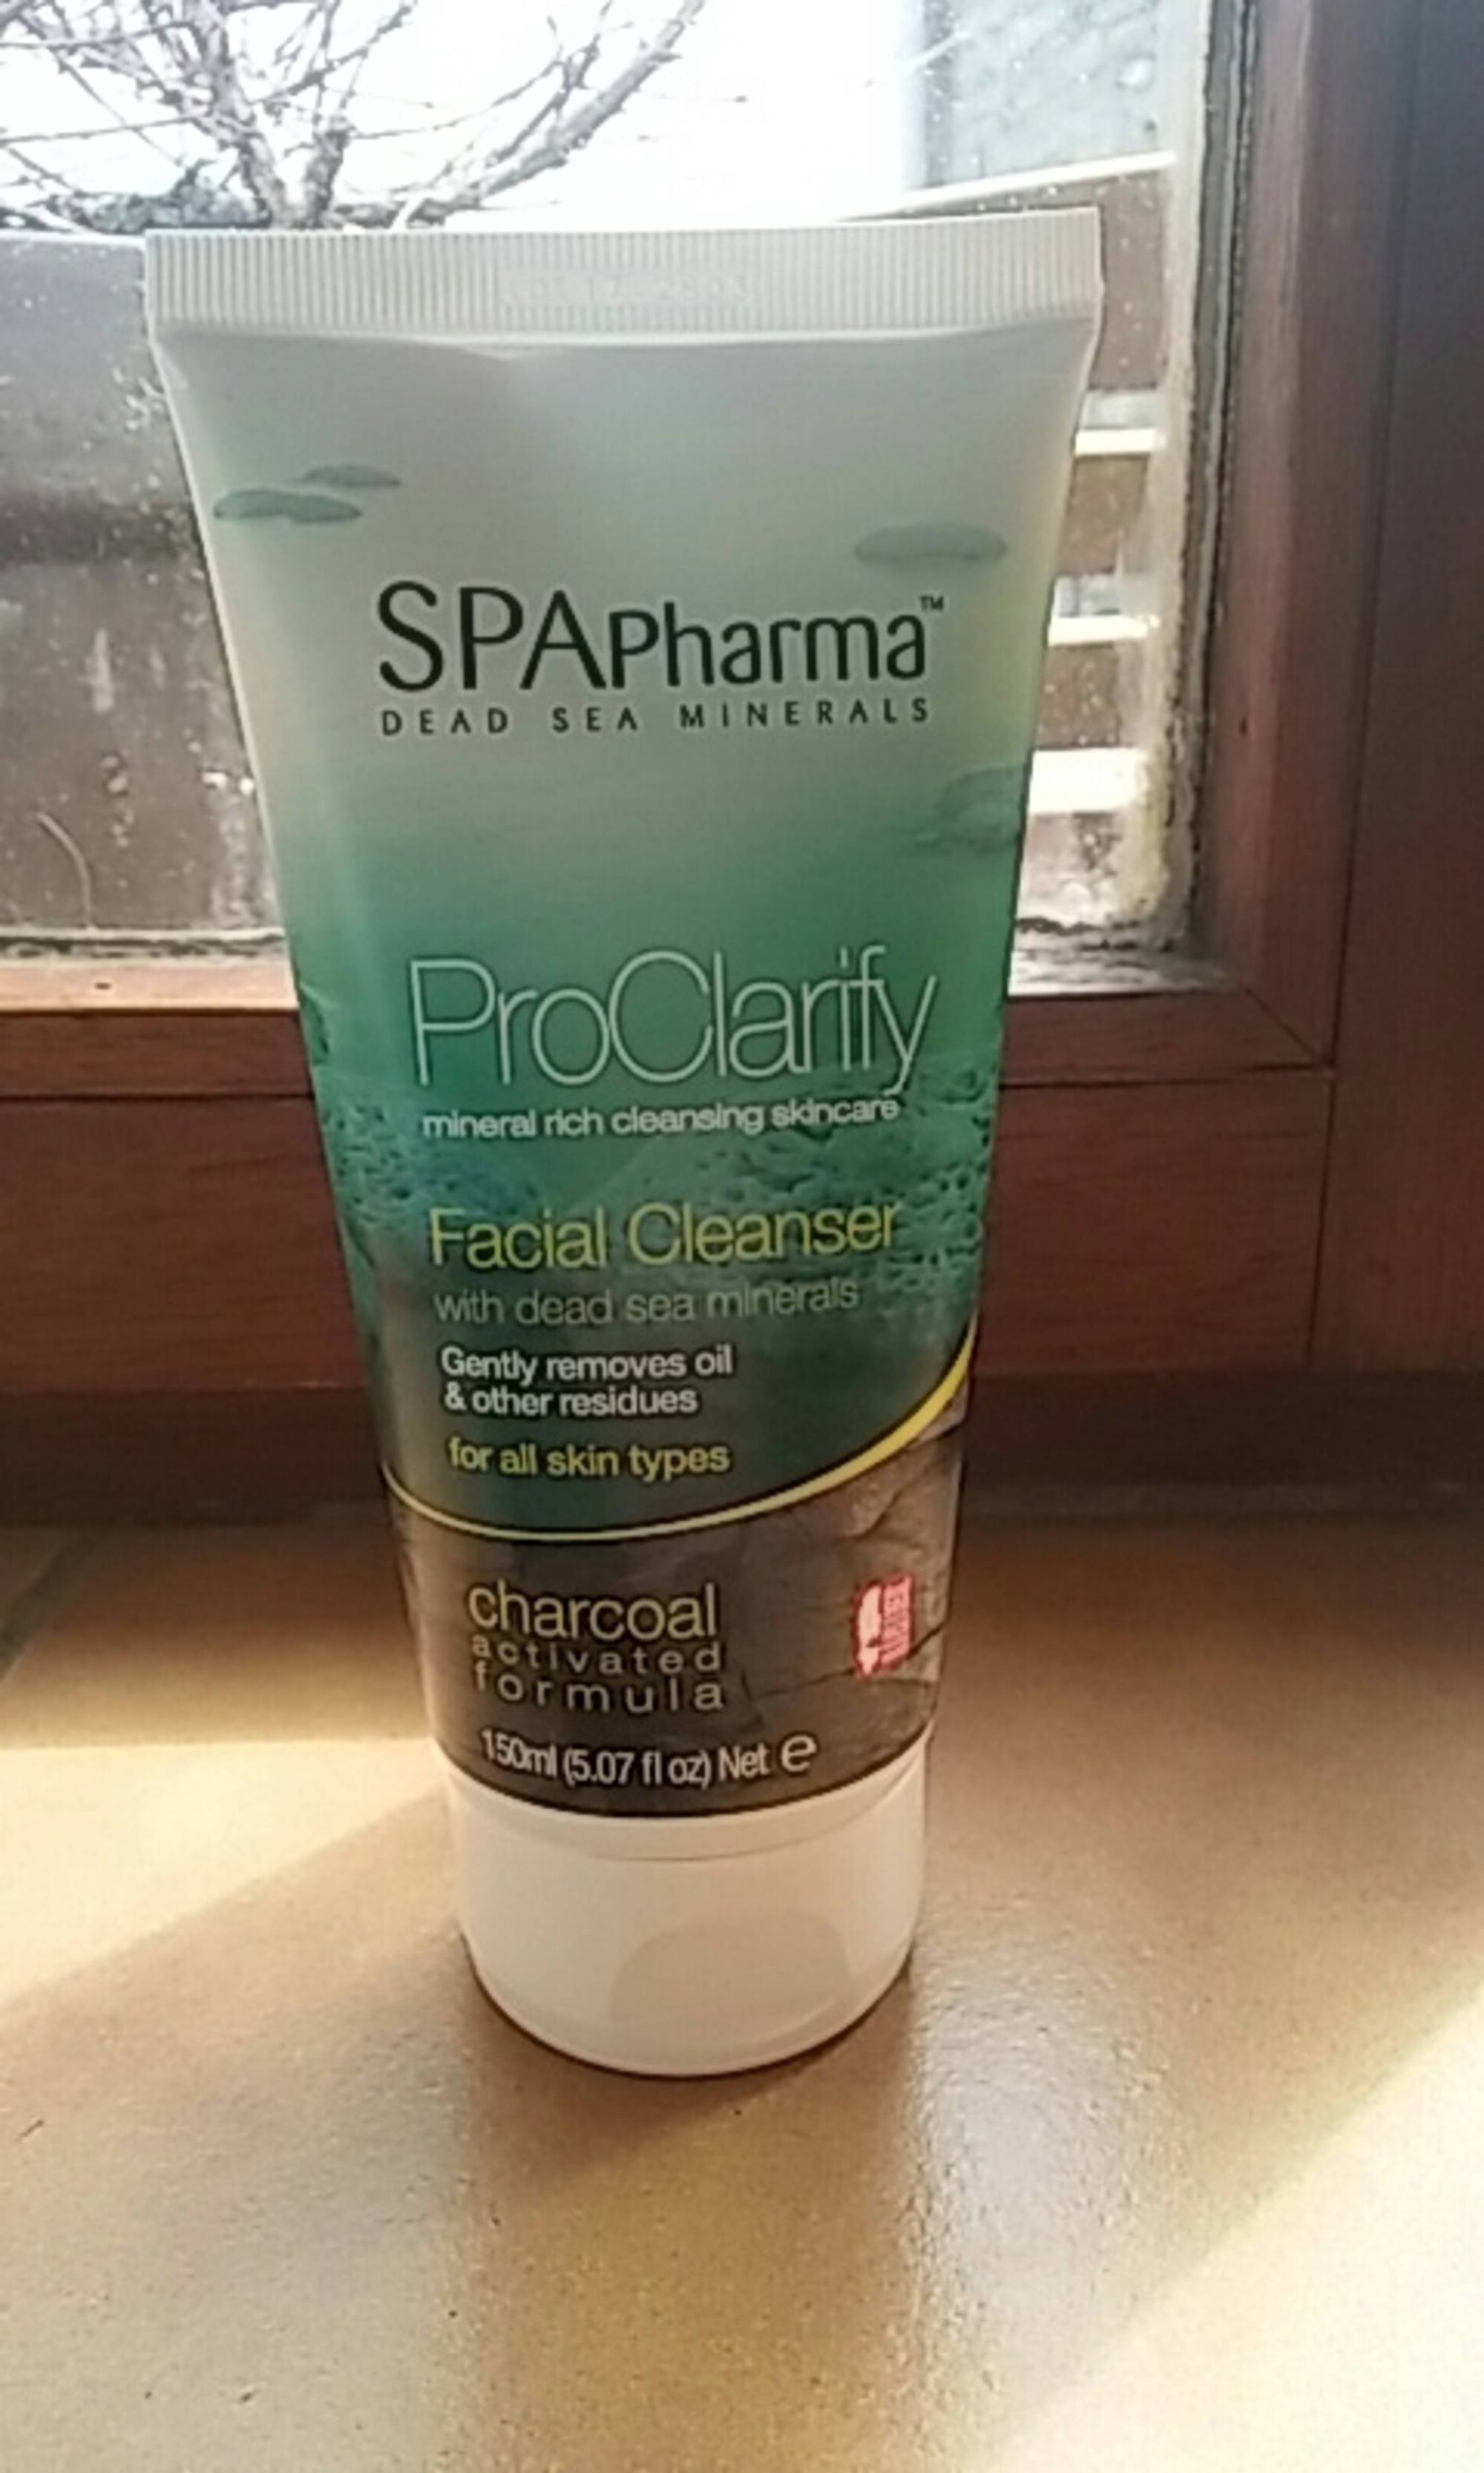 SPA PHARMA - Proclarify - facial cleanser